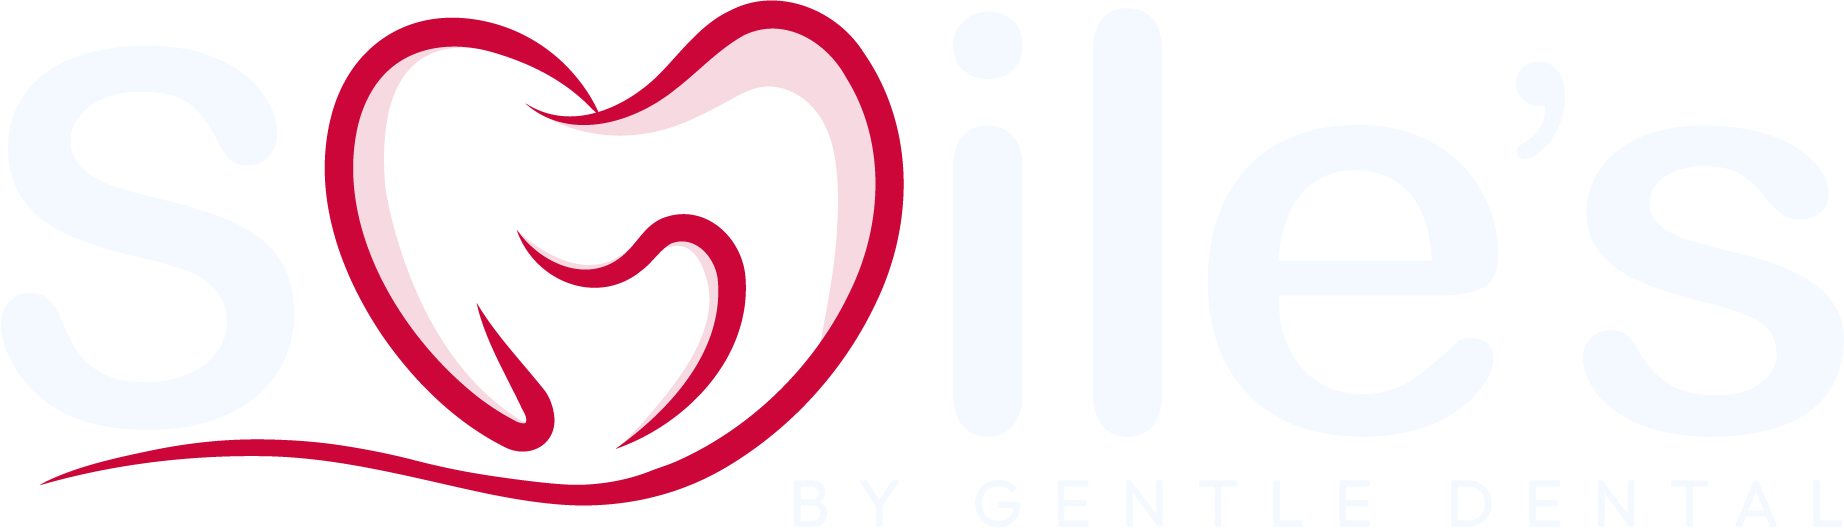 brand logo 